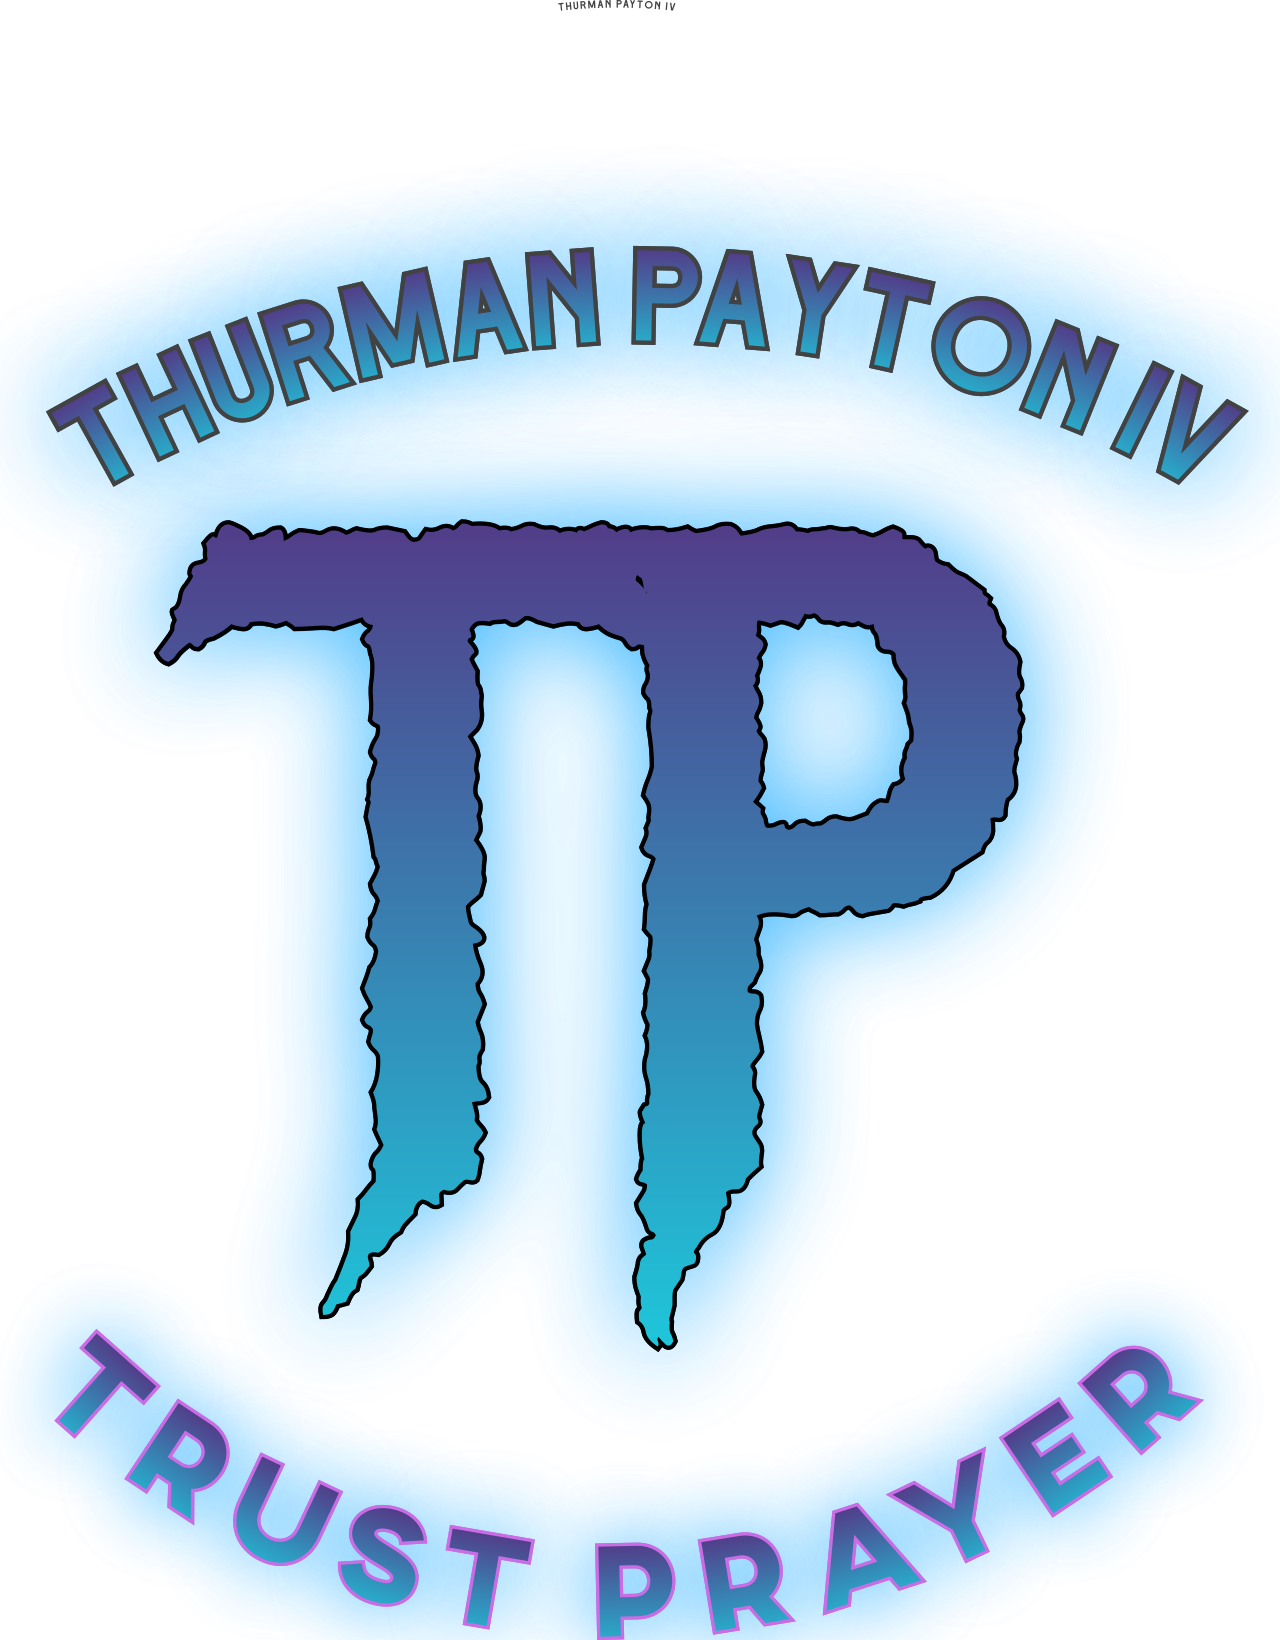 THURMAN PAYTON IV's logo